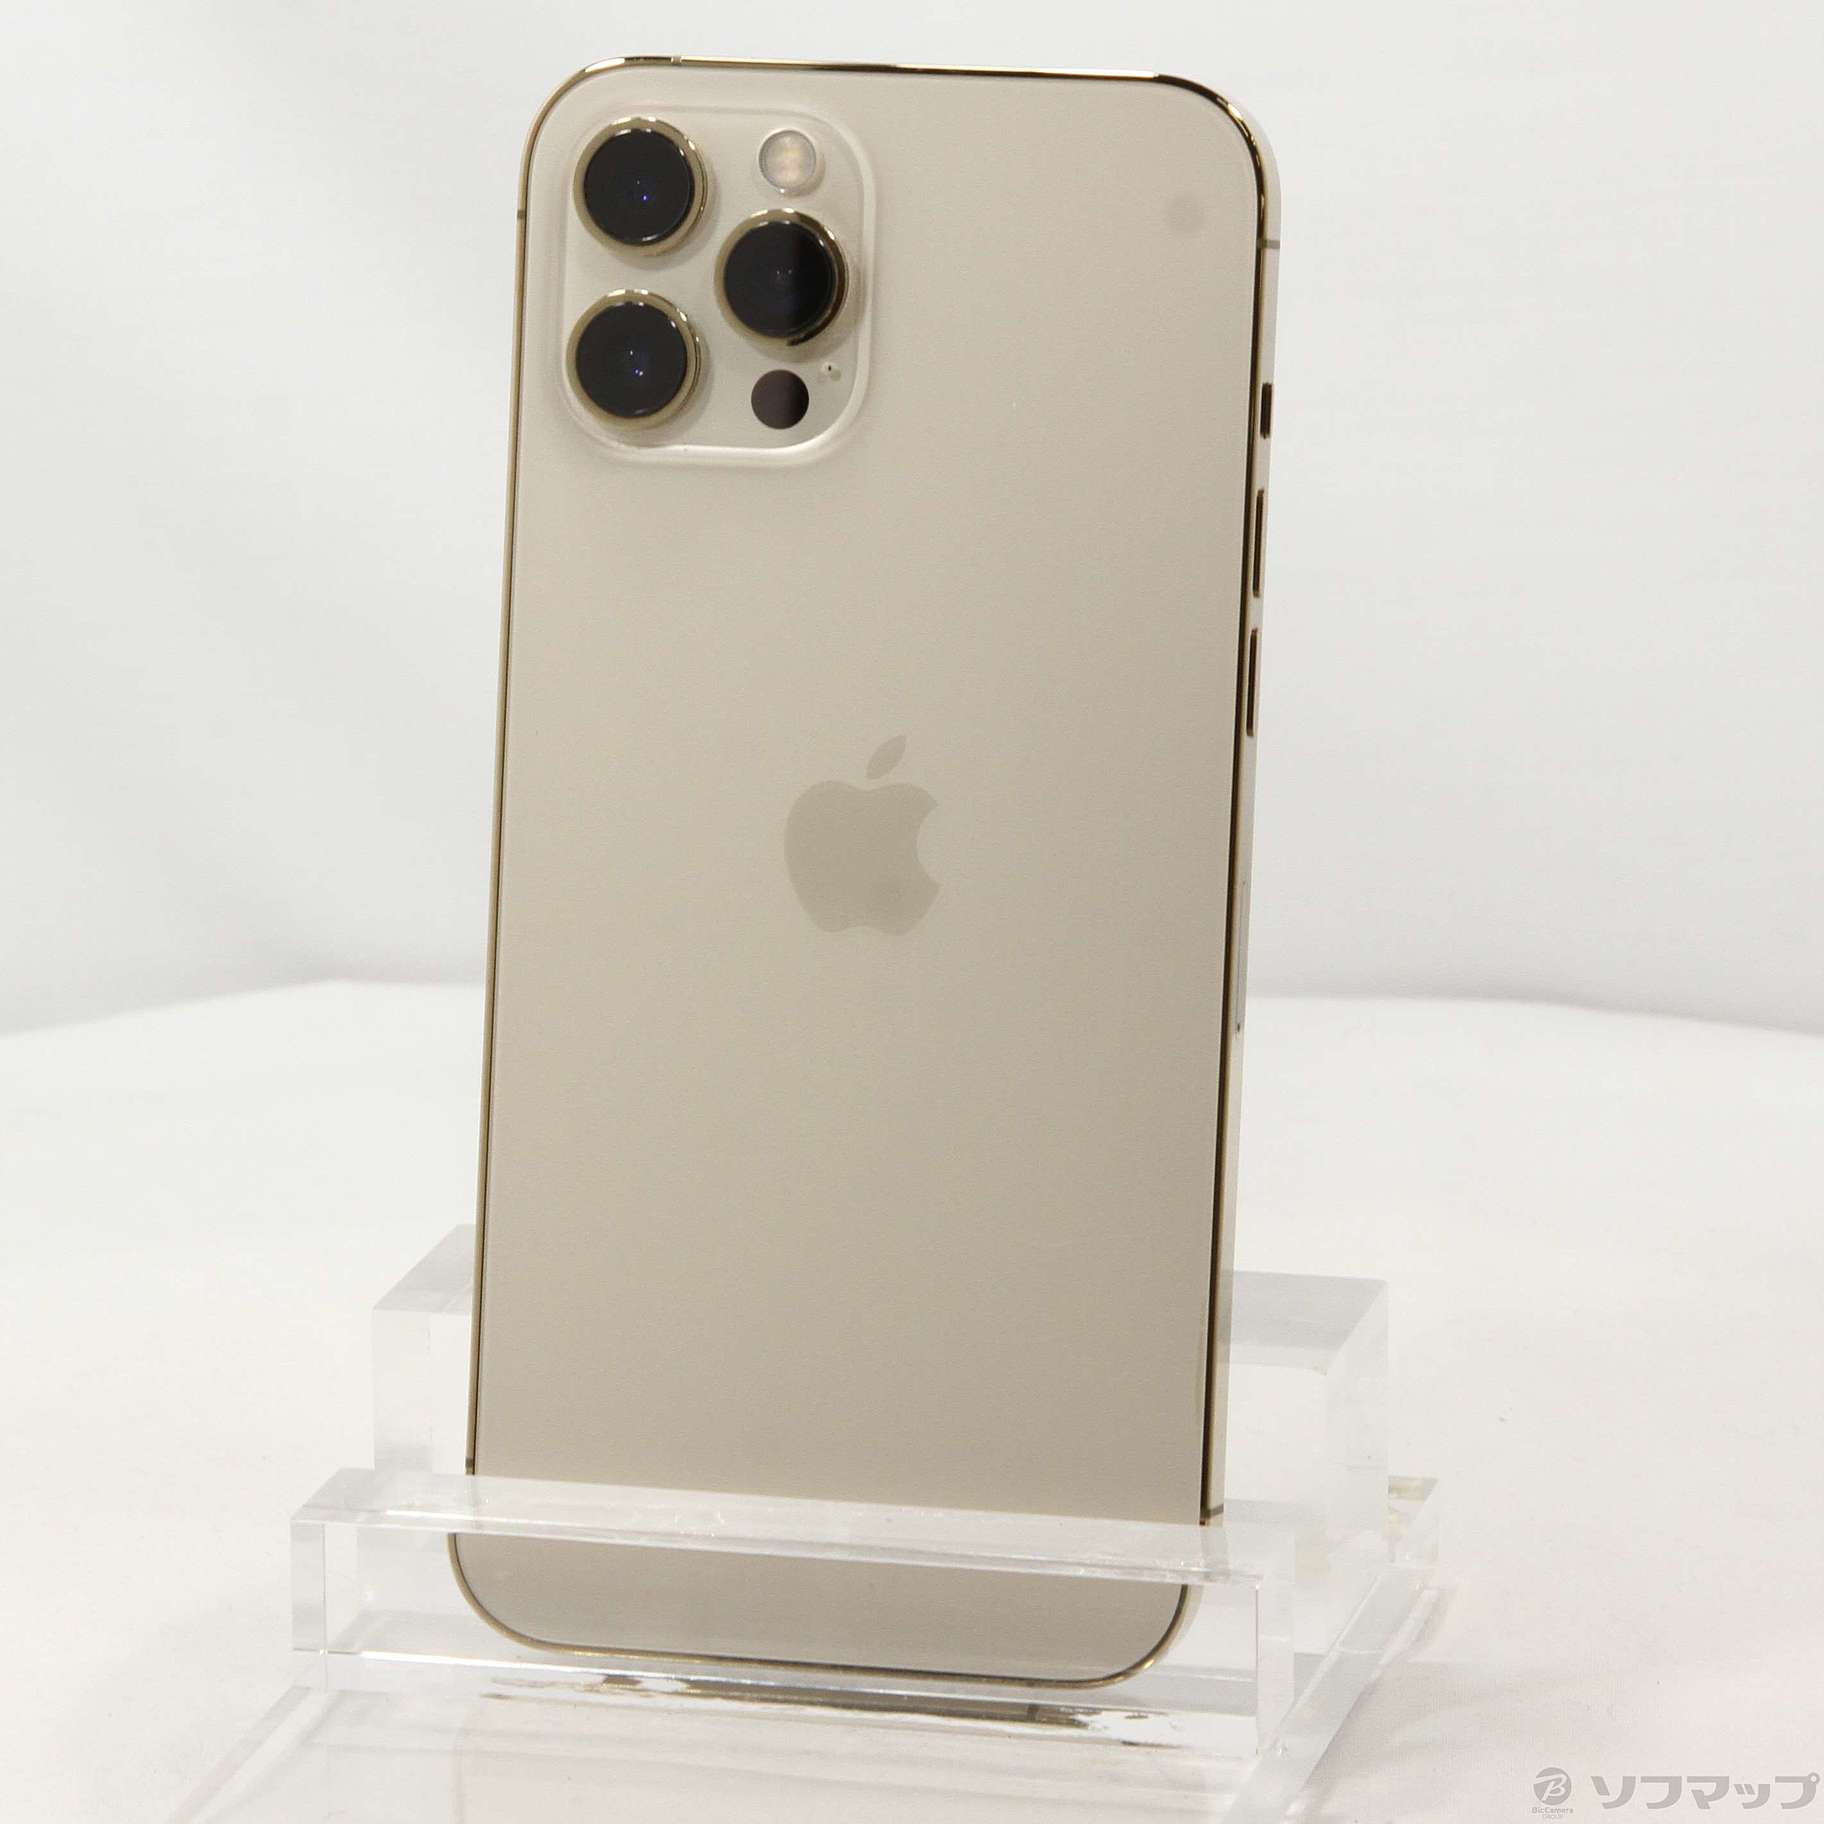 iPhone 12 Pro Max 512GB SIMフリー [ゴールド] 中古(白ロム)価格比較